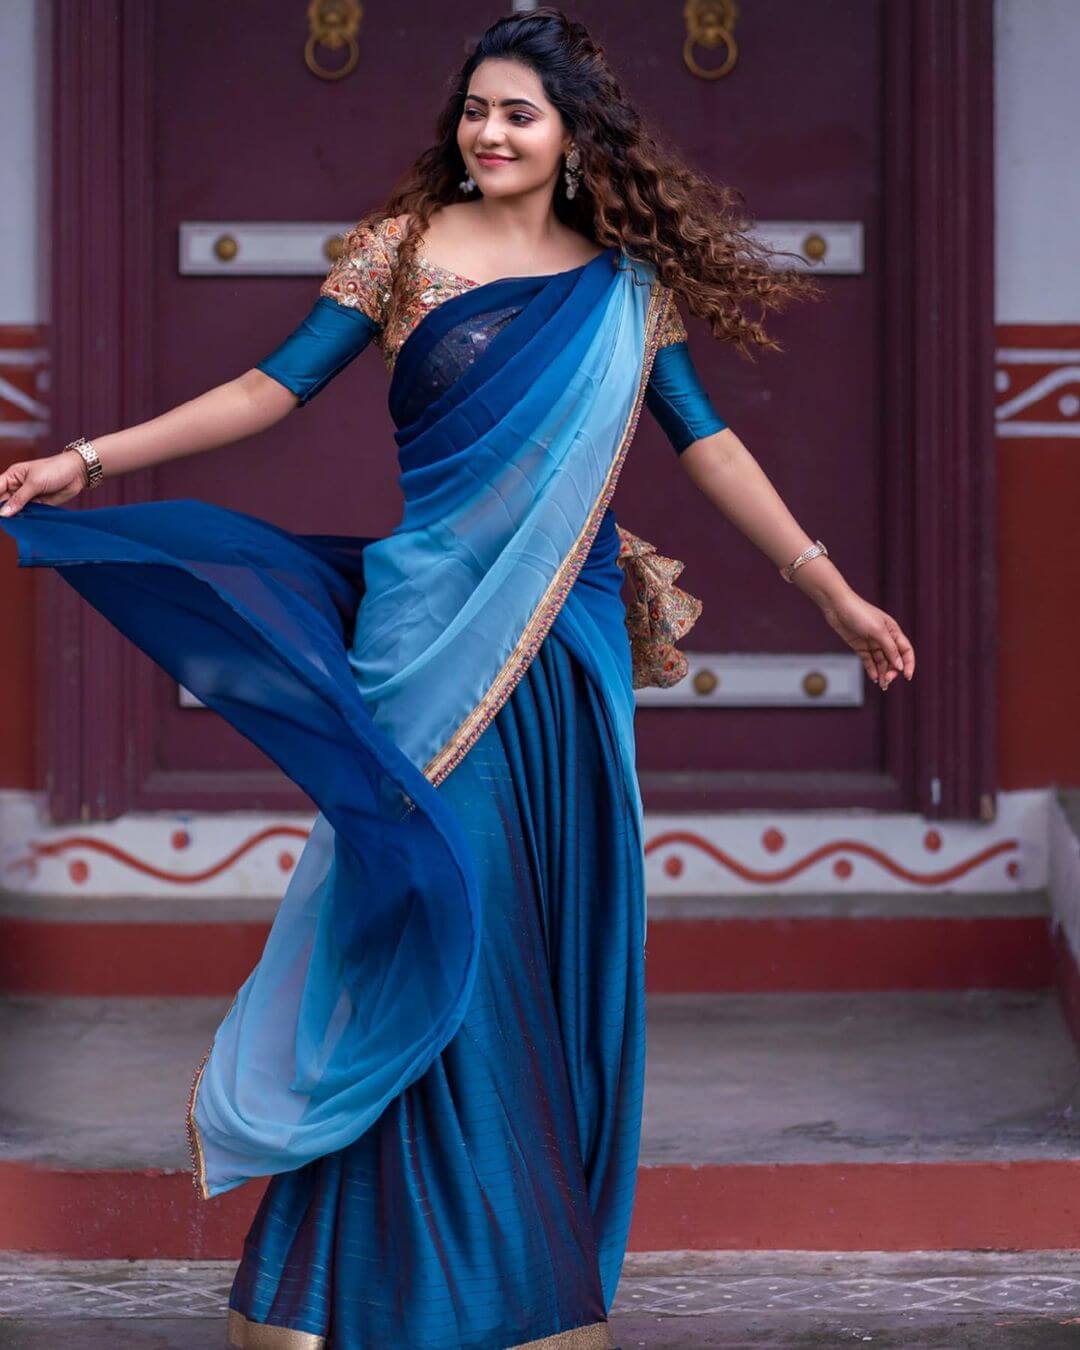 Athulya Ravi In Peacock Blue Lehenga Outfit